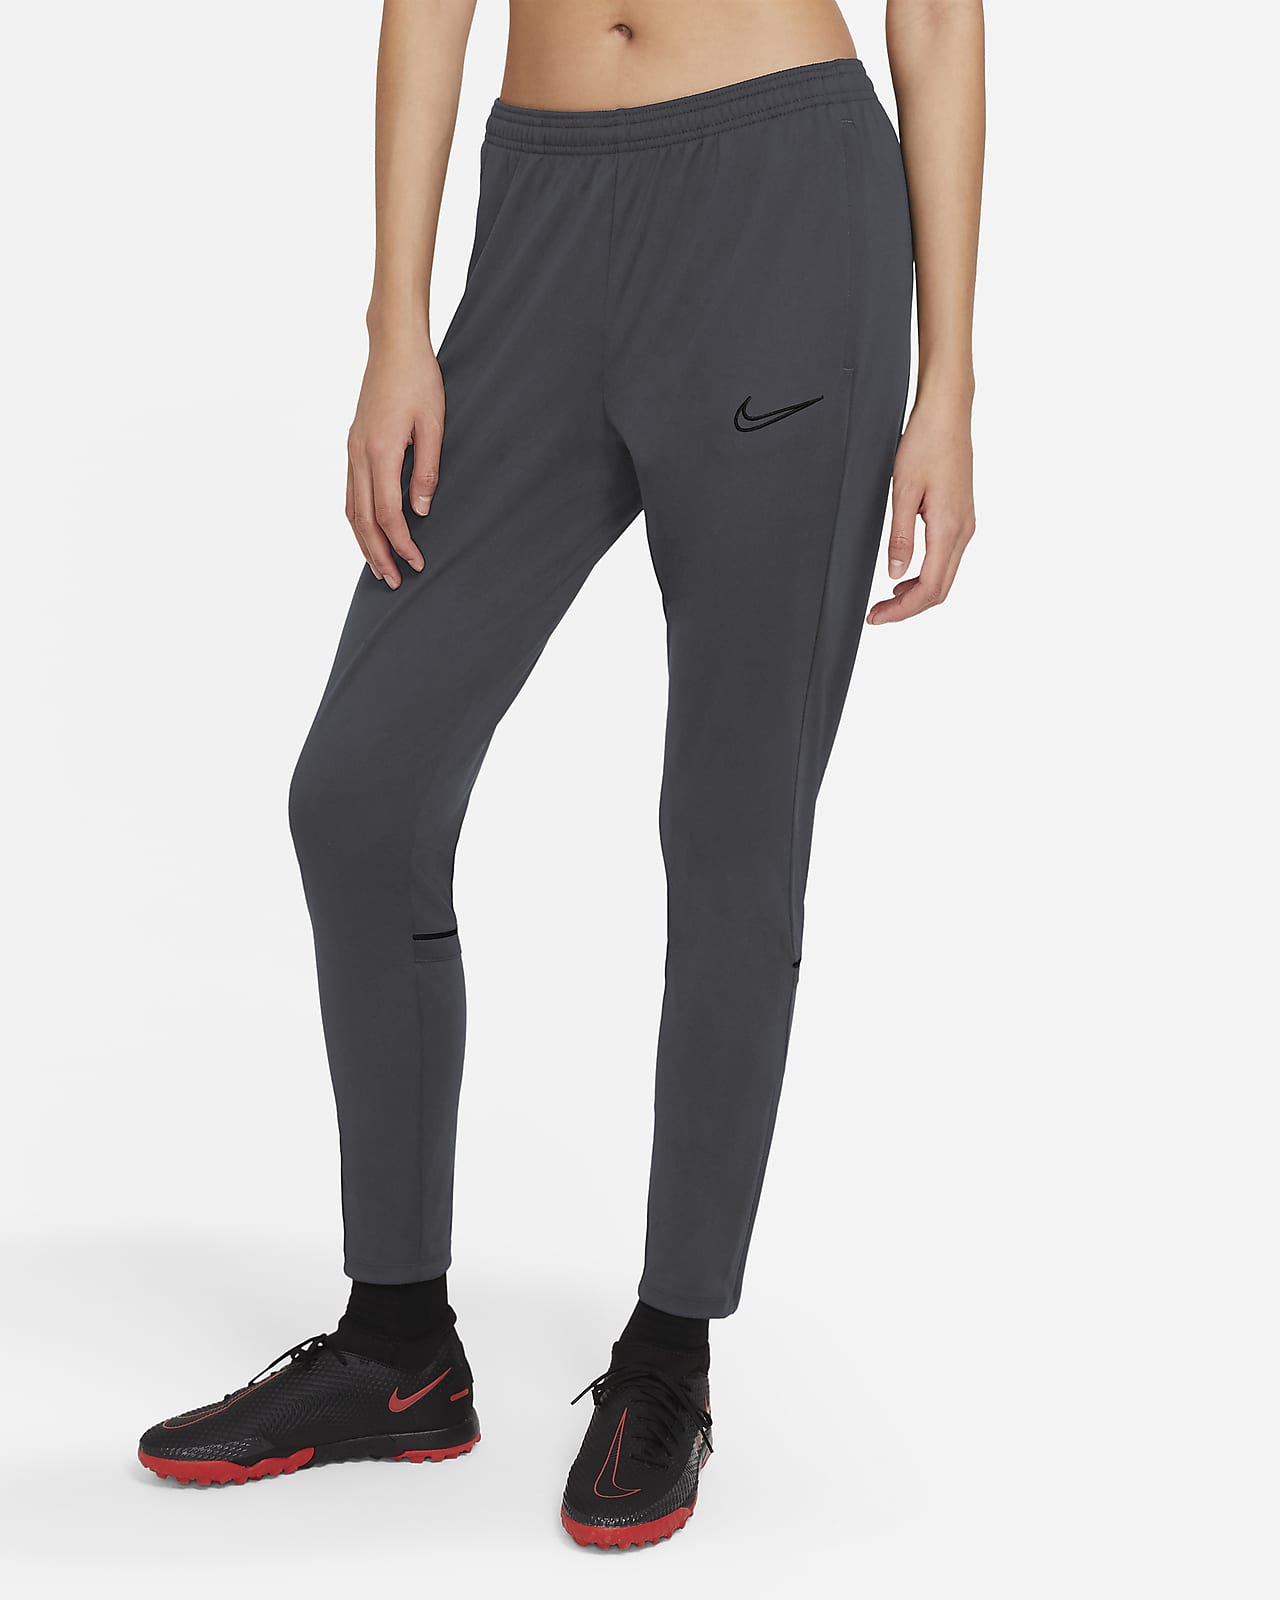 Pants de fútbol para mujer Nike Academy. Nike.com